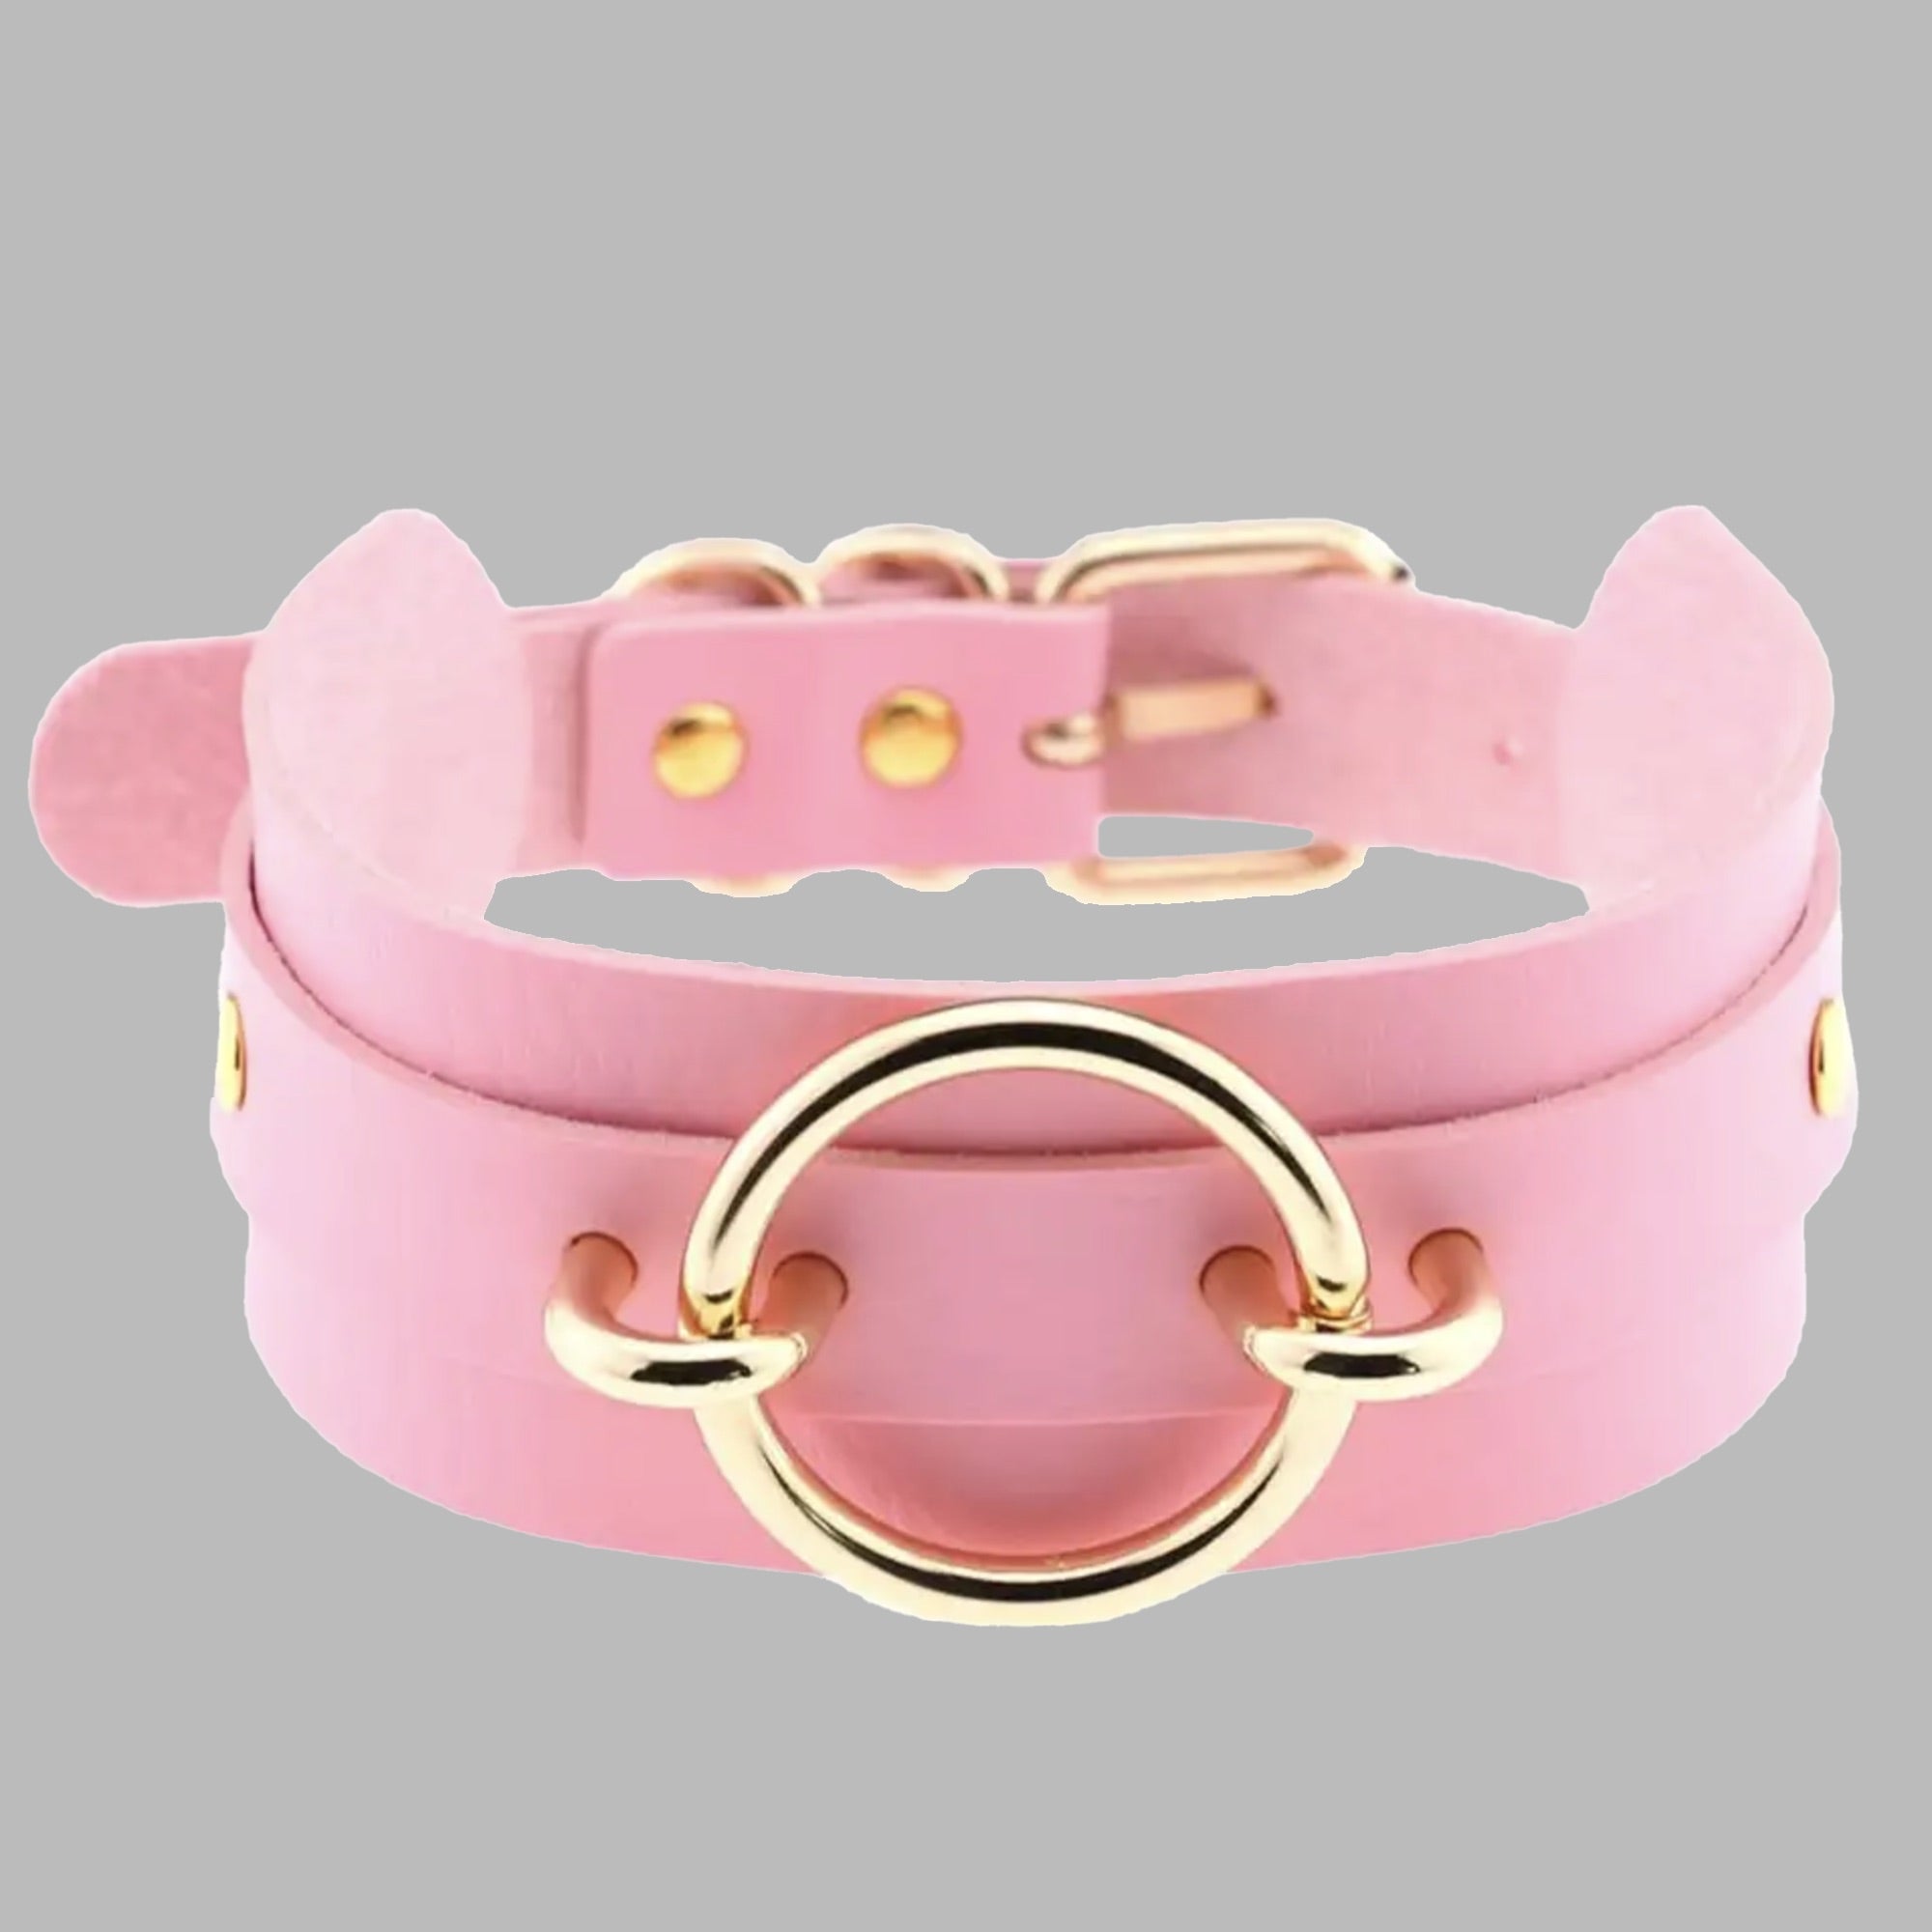 Fixed O Ring Choker Collar - Baby Pink & Gold